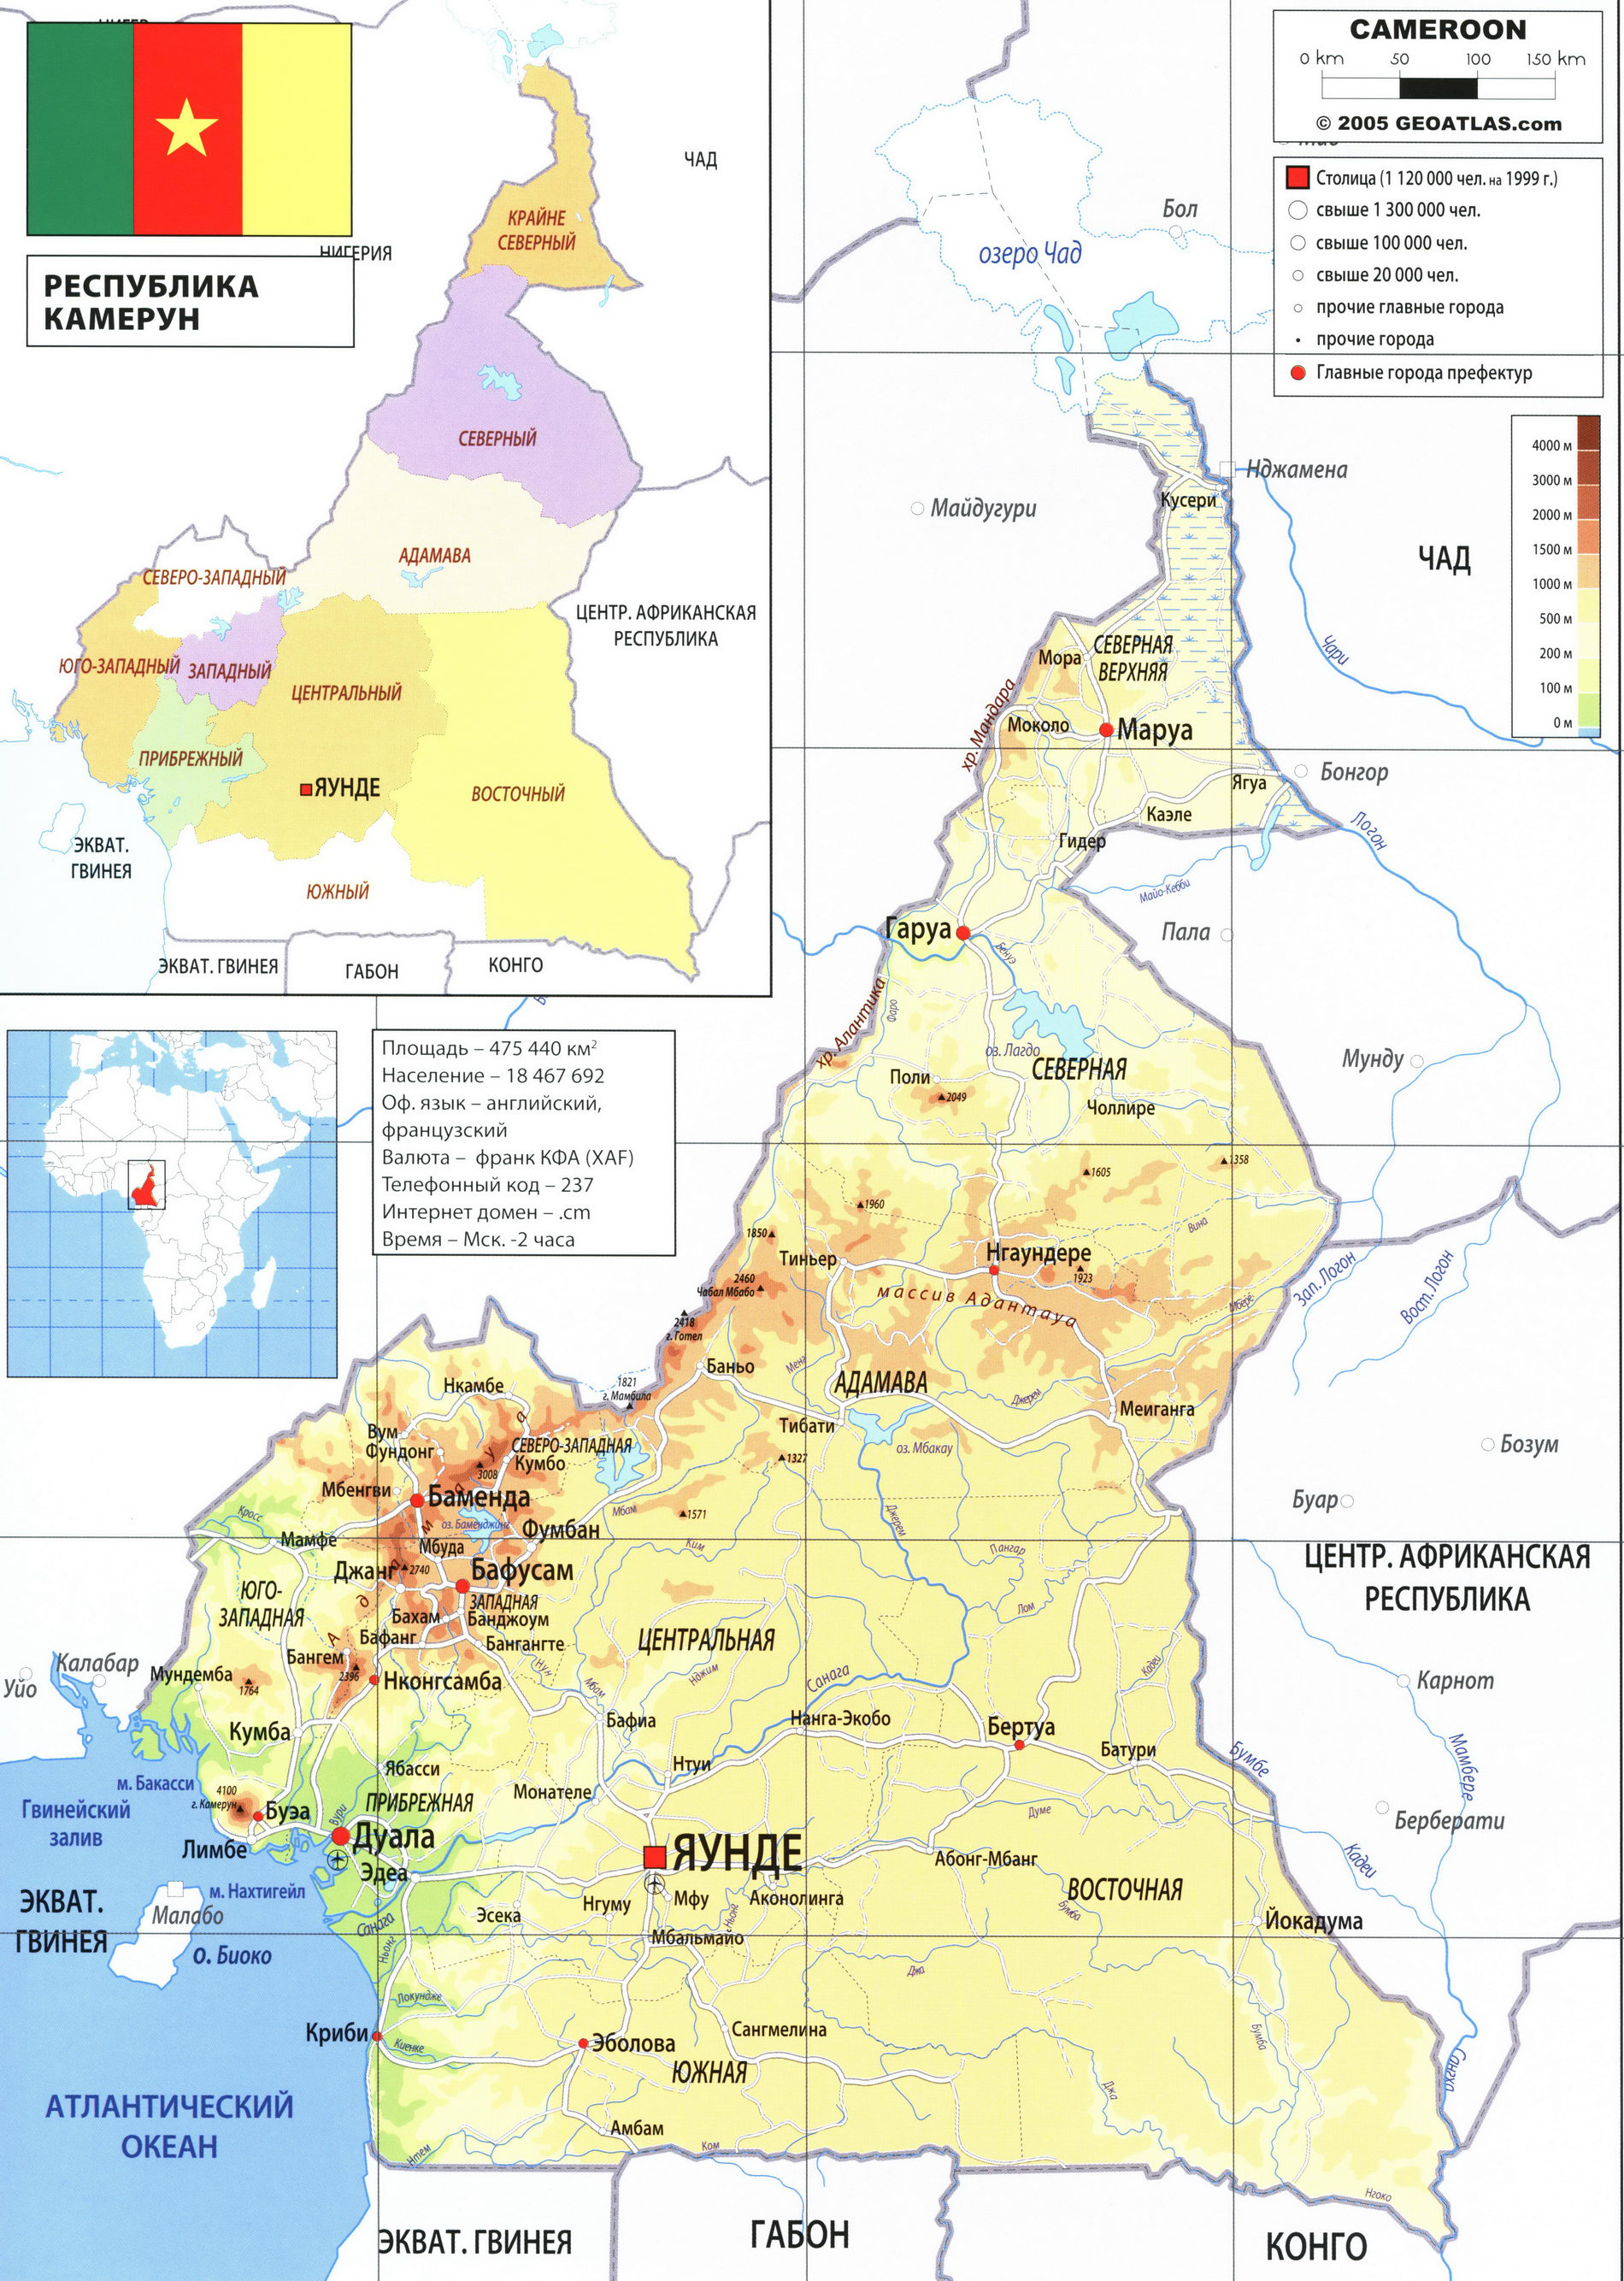 Камерун карта на русском языке